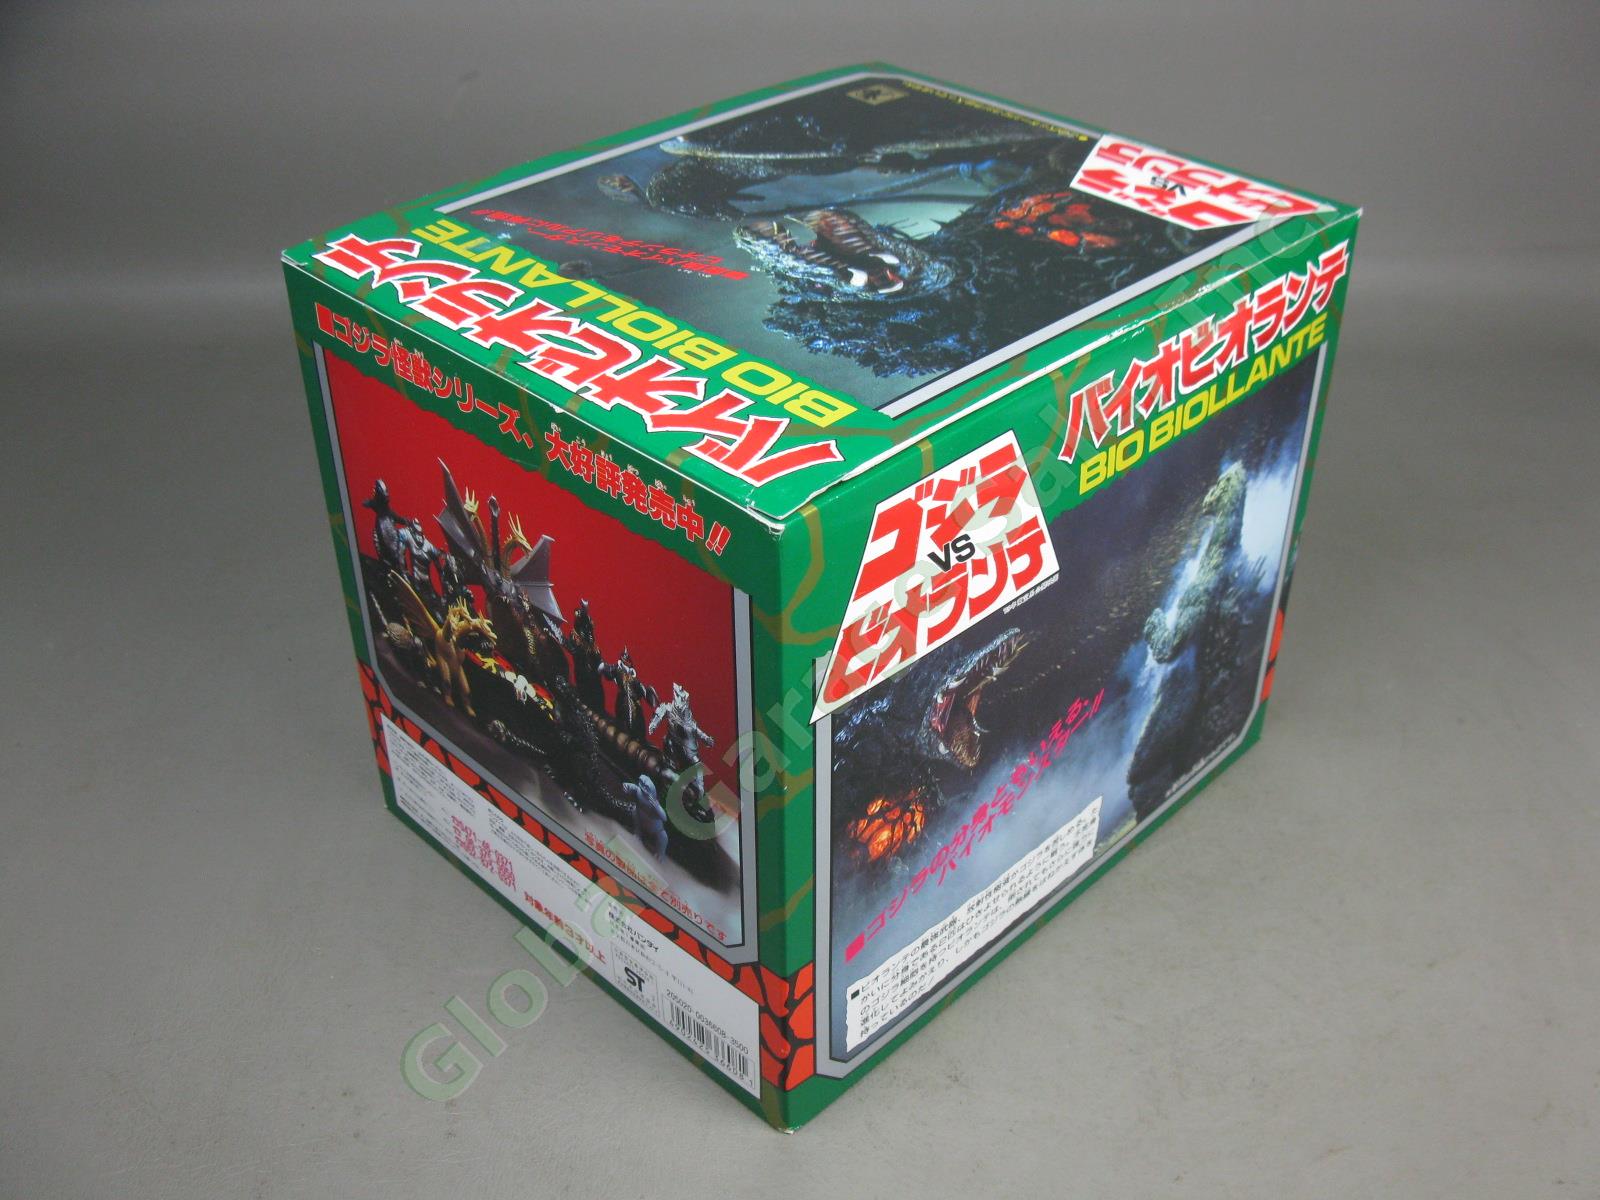 NIB 1992 Bandai Godzilla Vs Bio Biollante Soft Vinyl Monster Figure W/ Box Japan 2